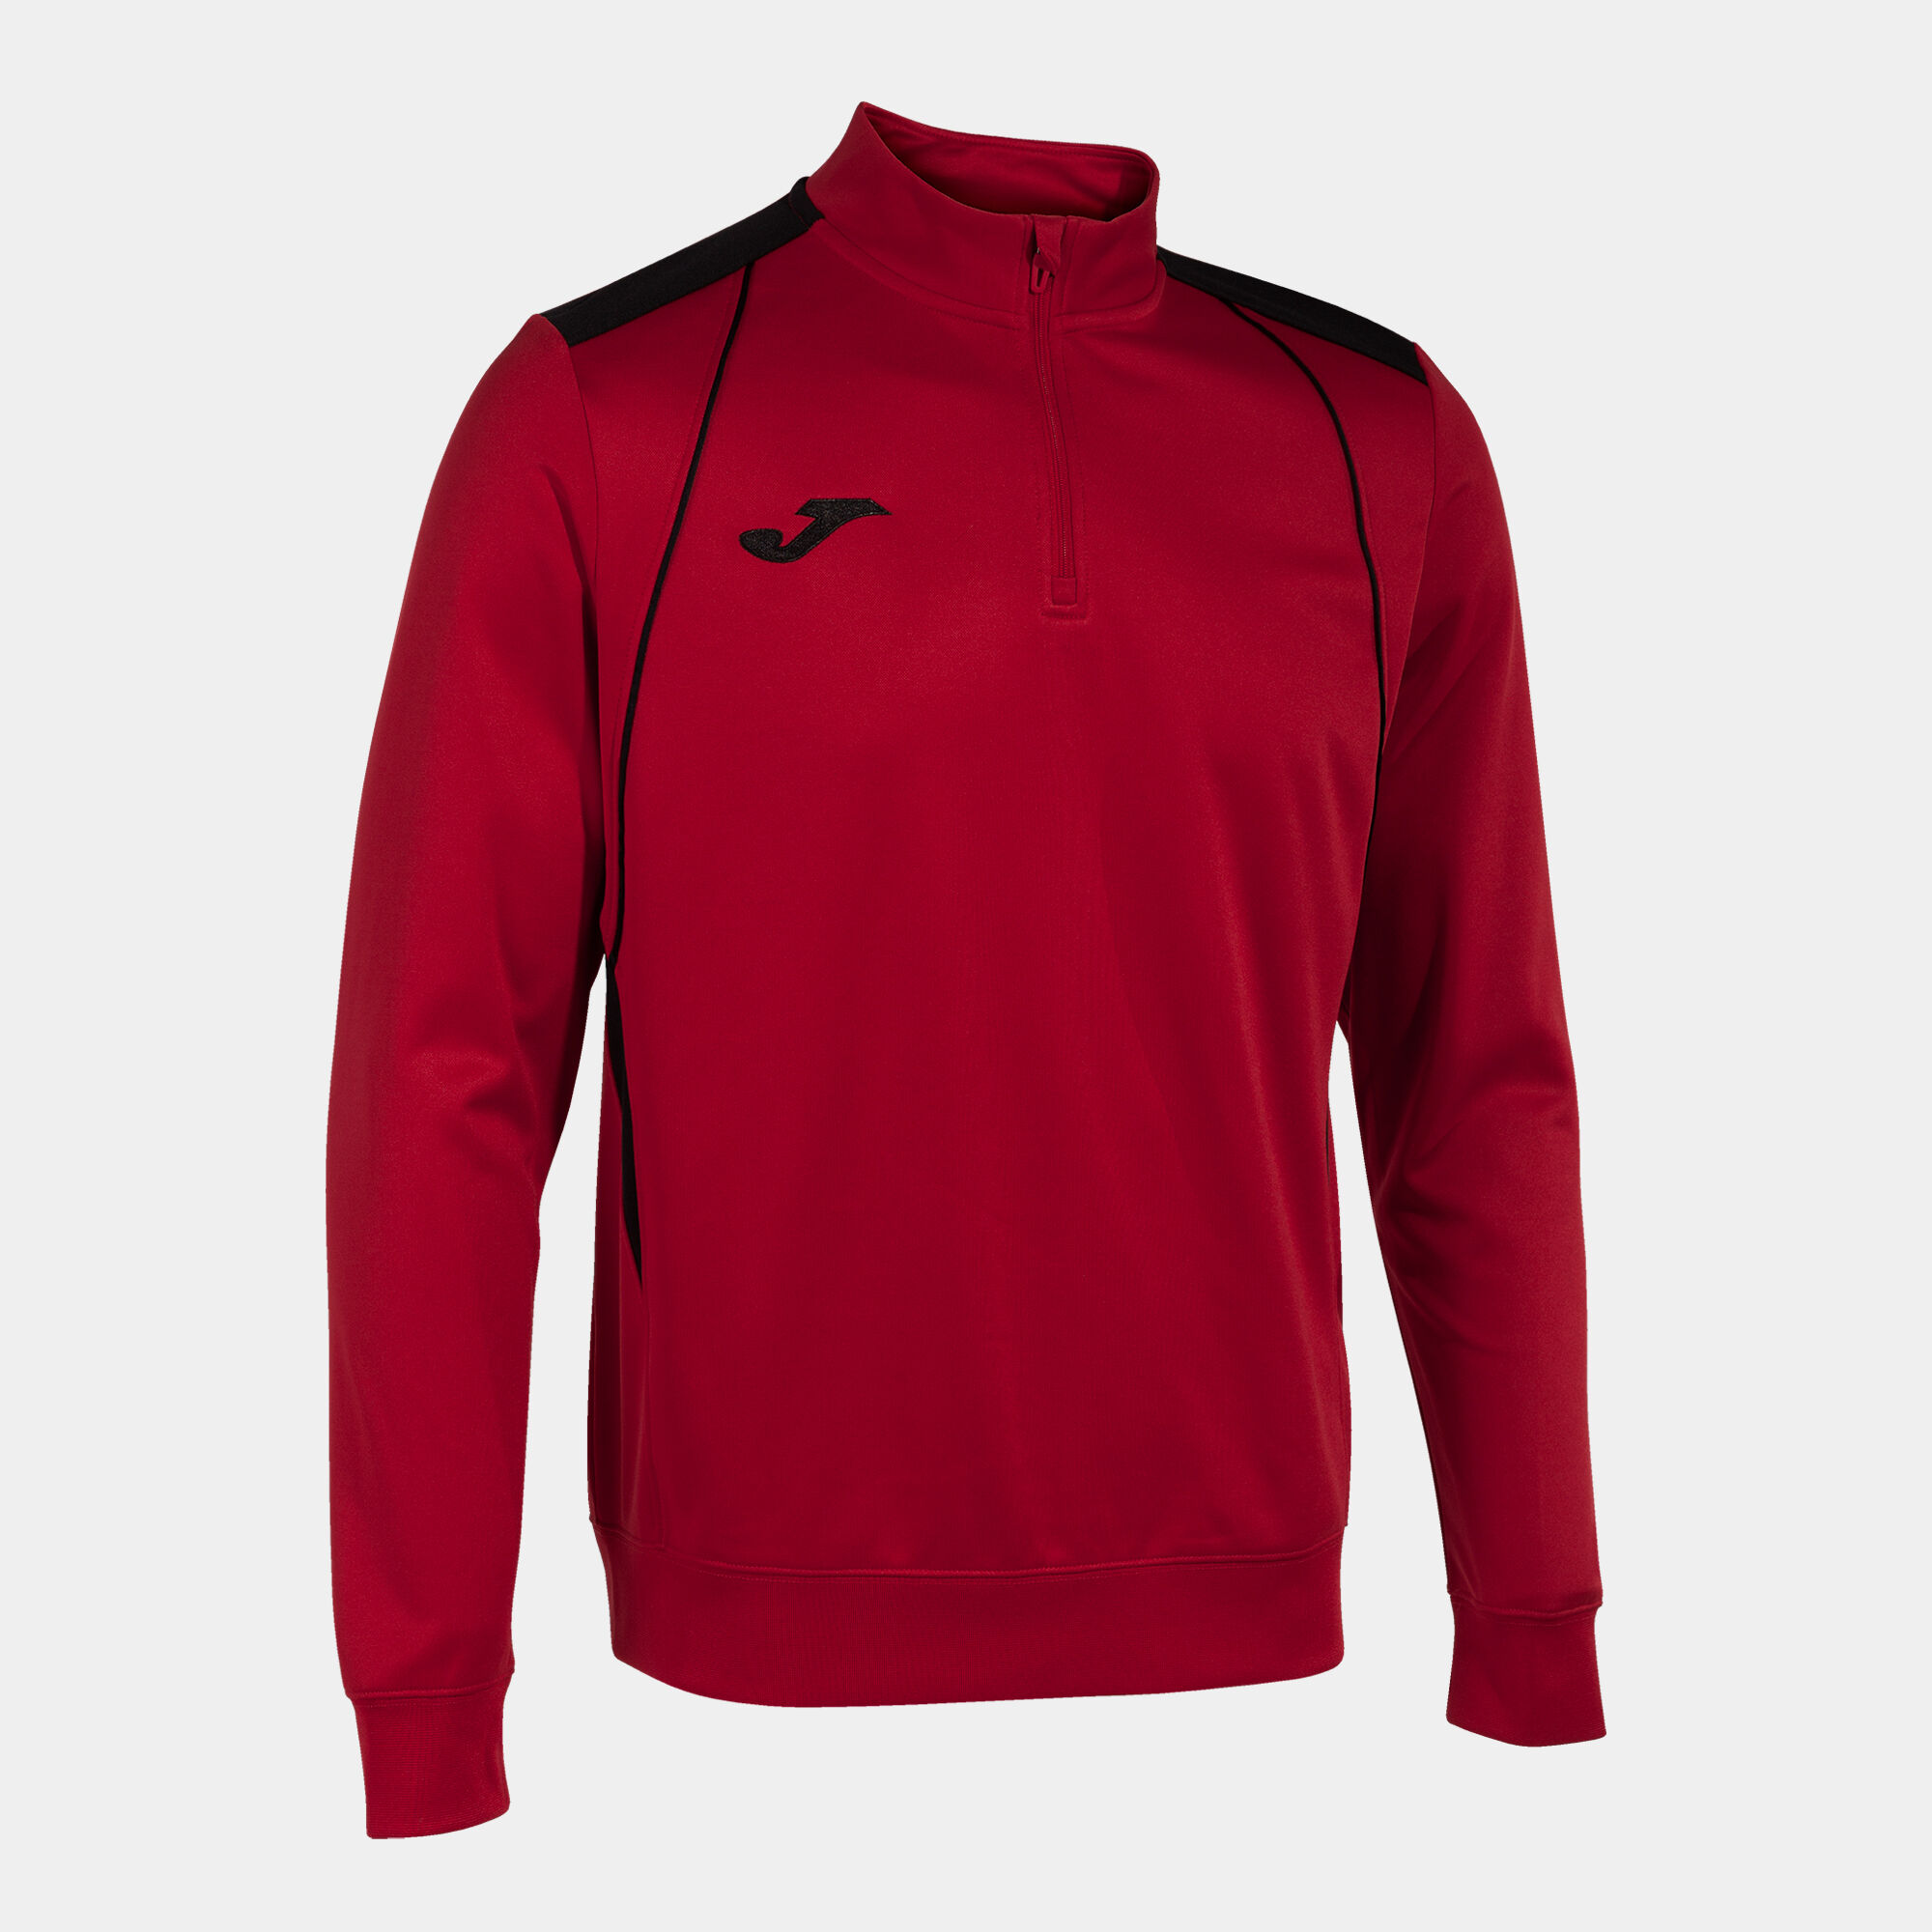 Sweat-shirt homme Championship VII rouge noir